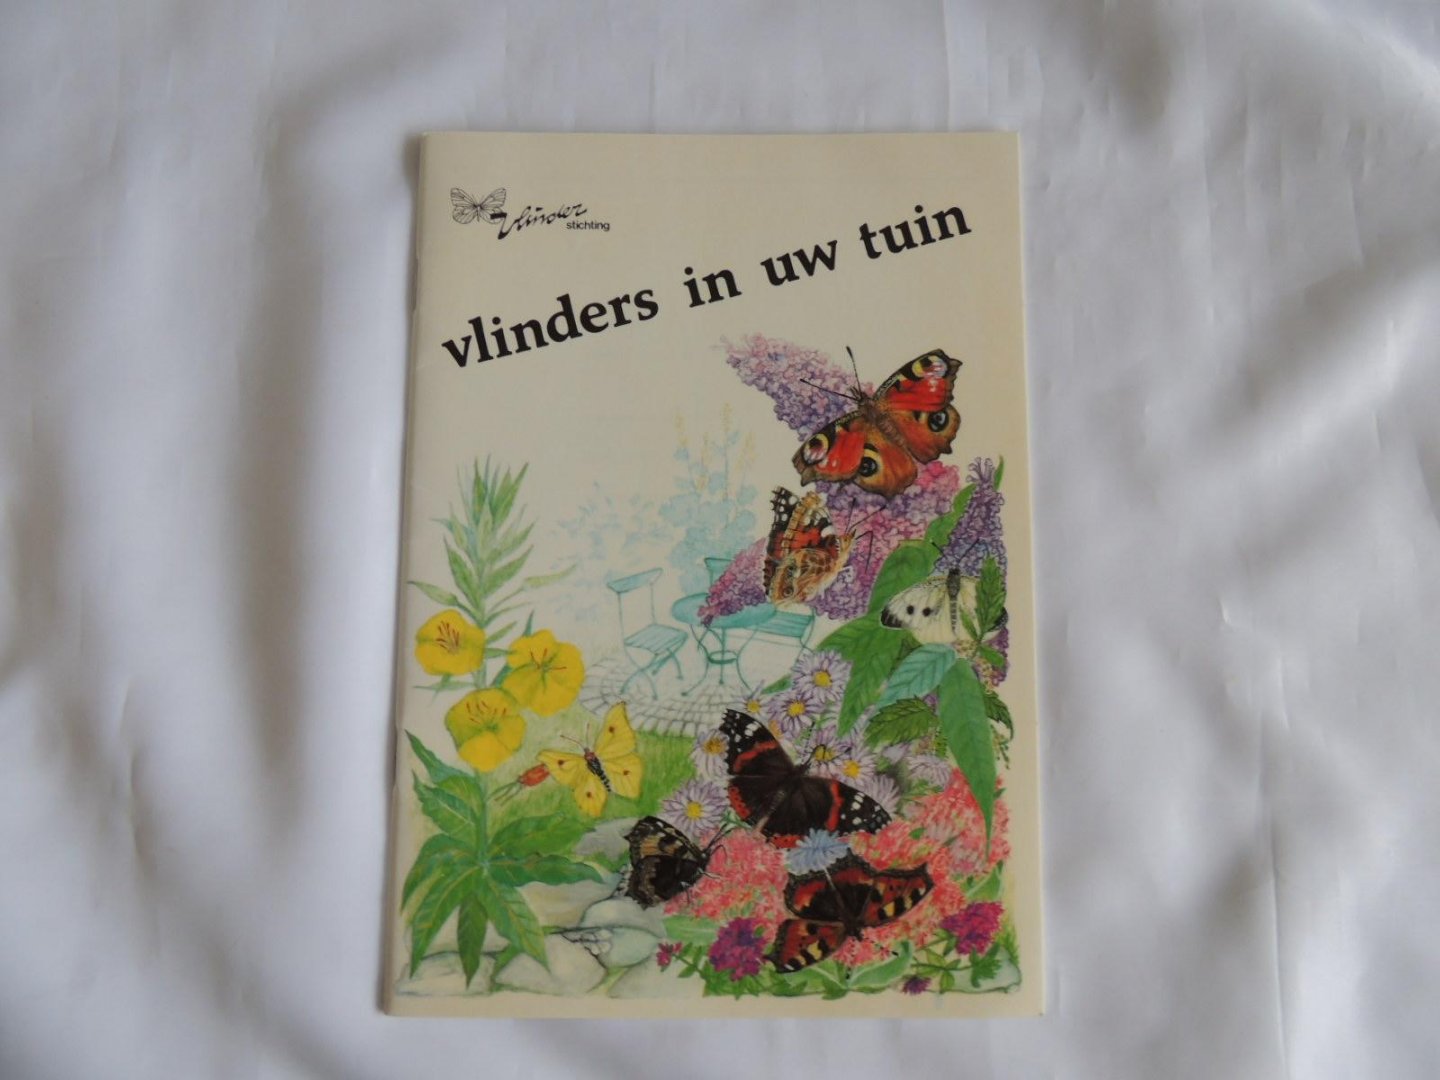 Kolk, Aleid van der - Vlinders in uw tuin.